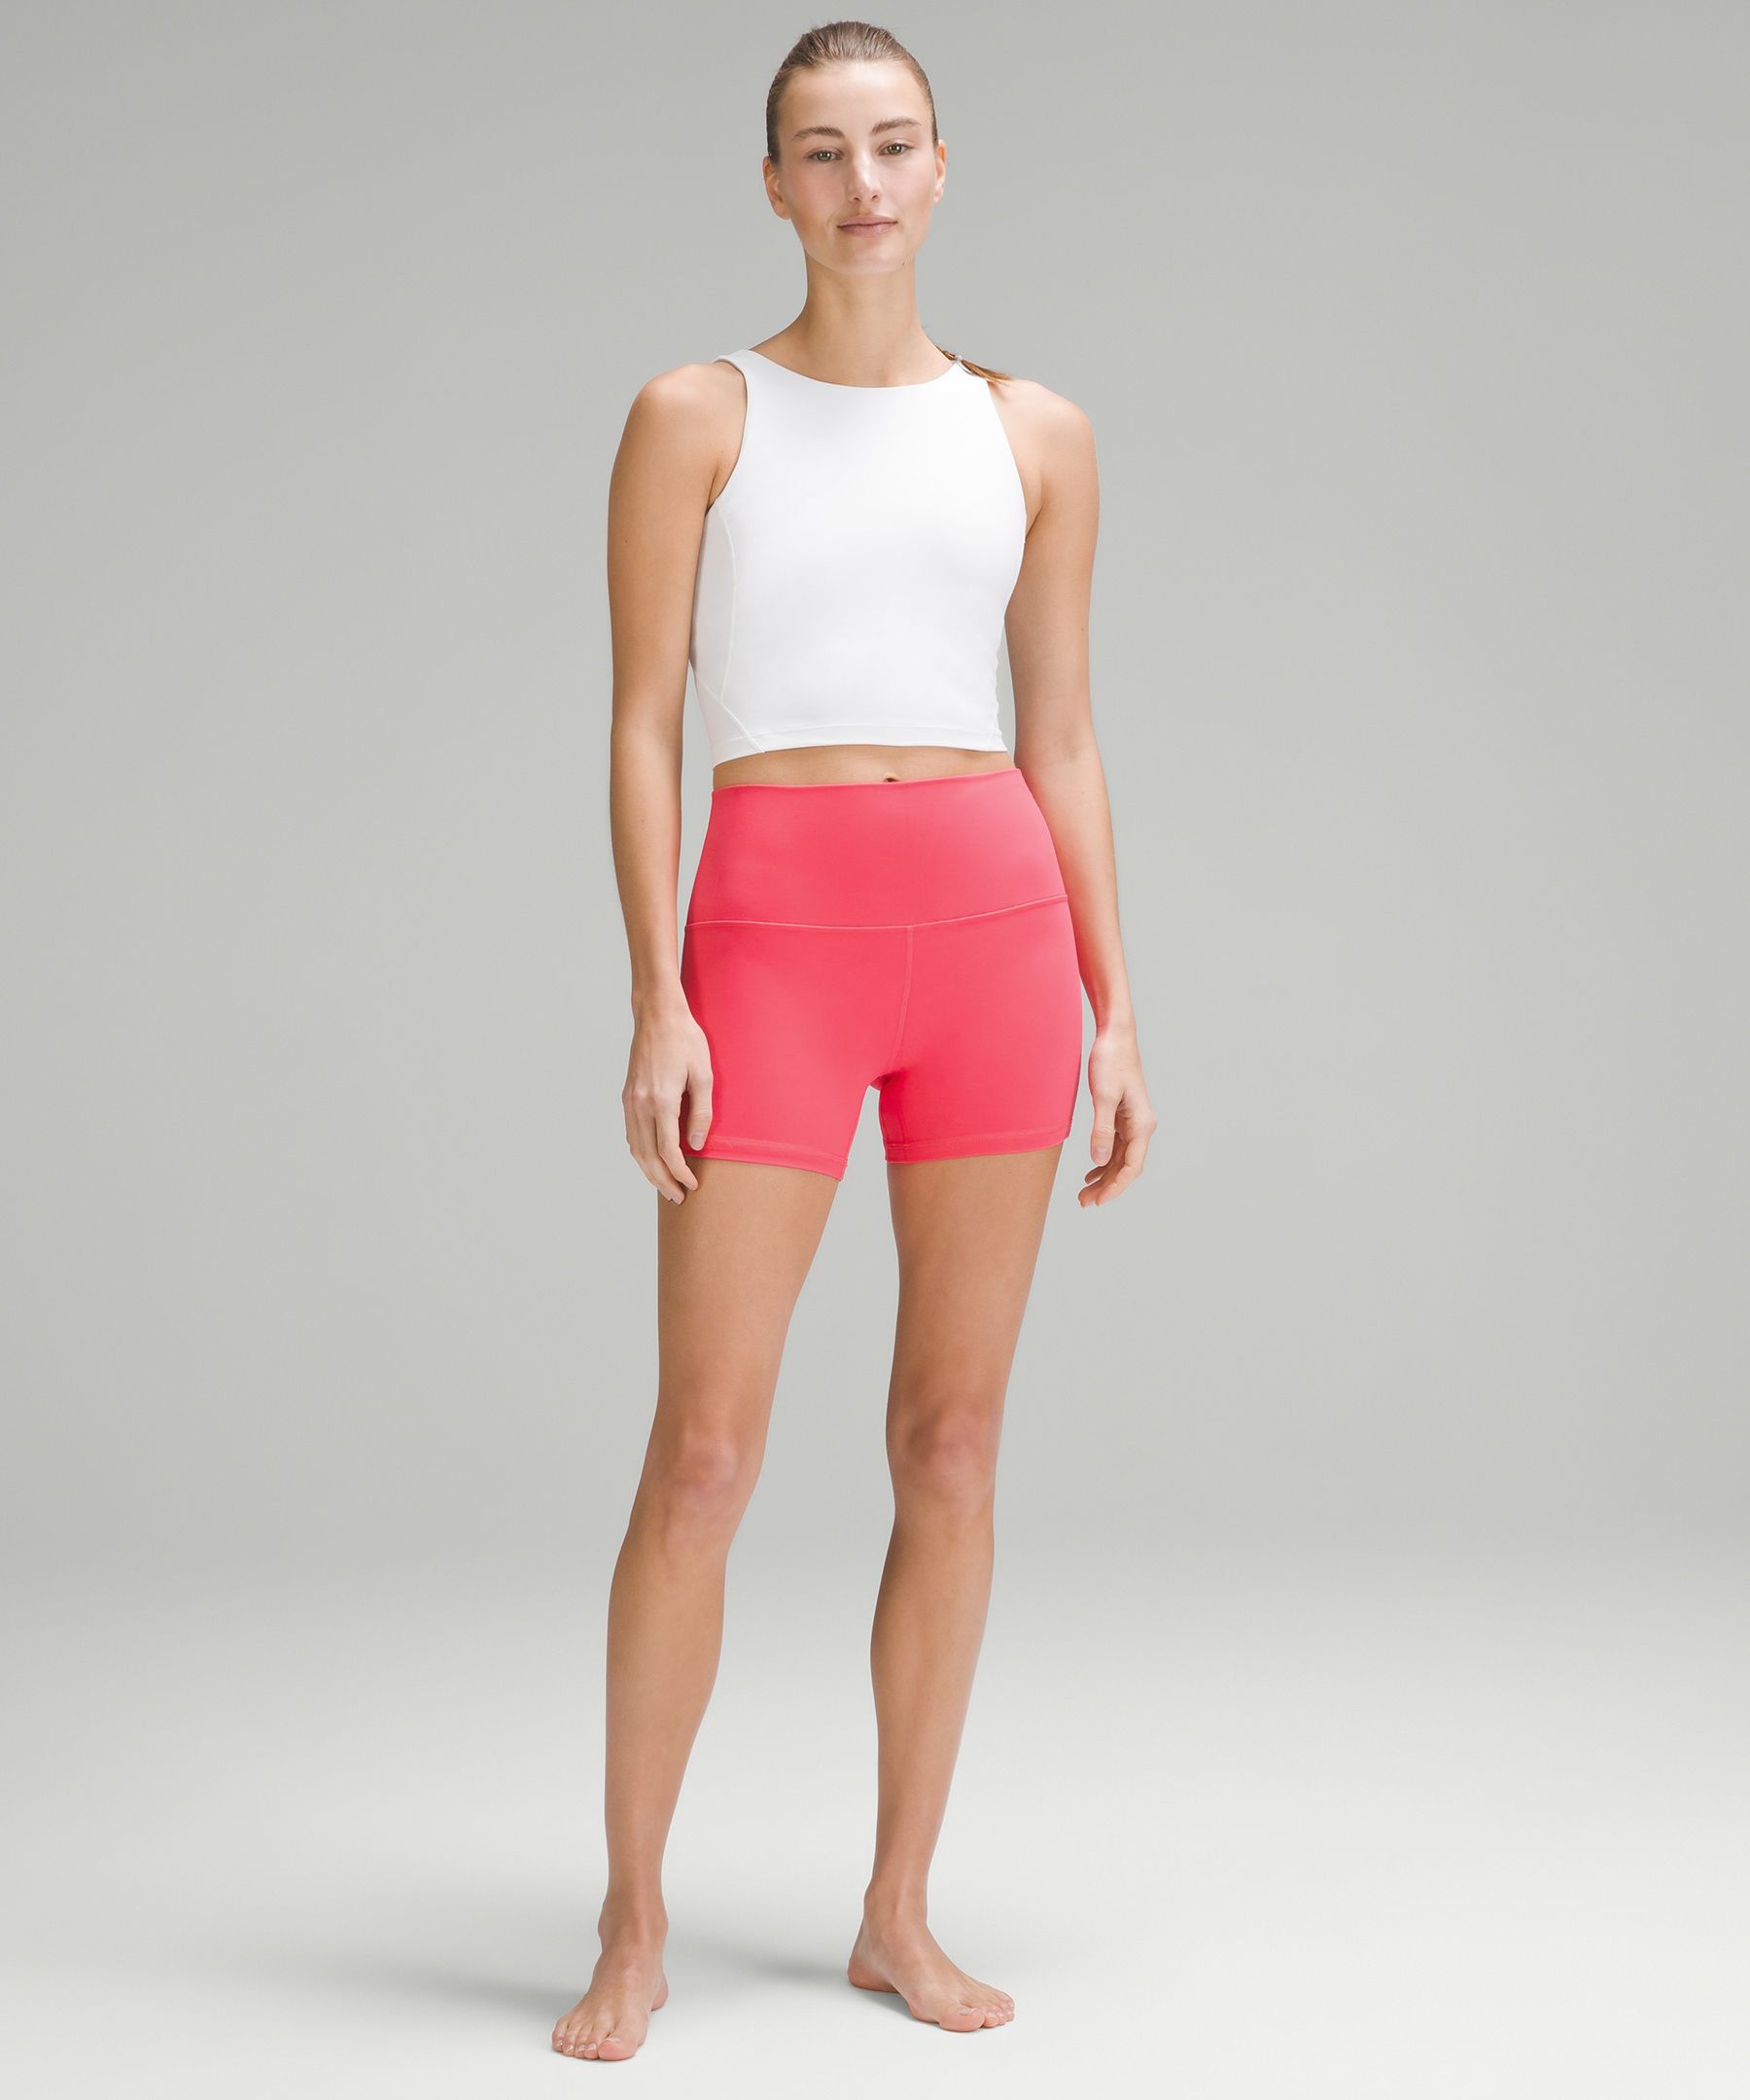 Lululemon Softstreme High Rise Short 4” Pink Size 6 - $65 (16% Off Retail)  - From Dakota